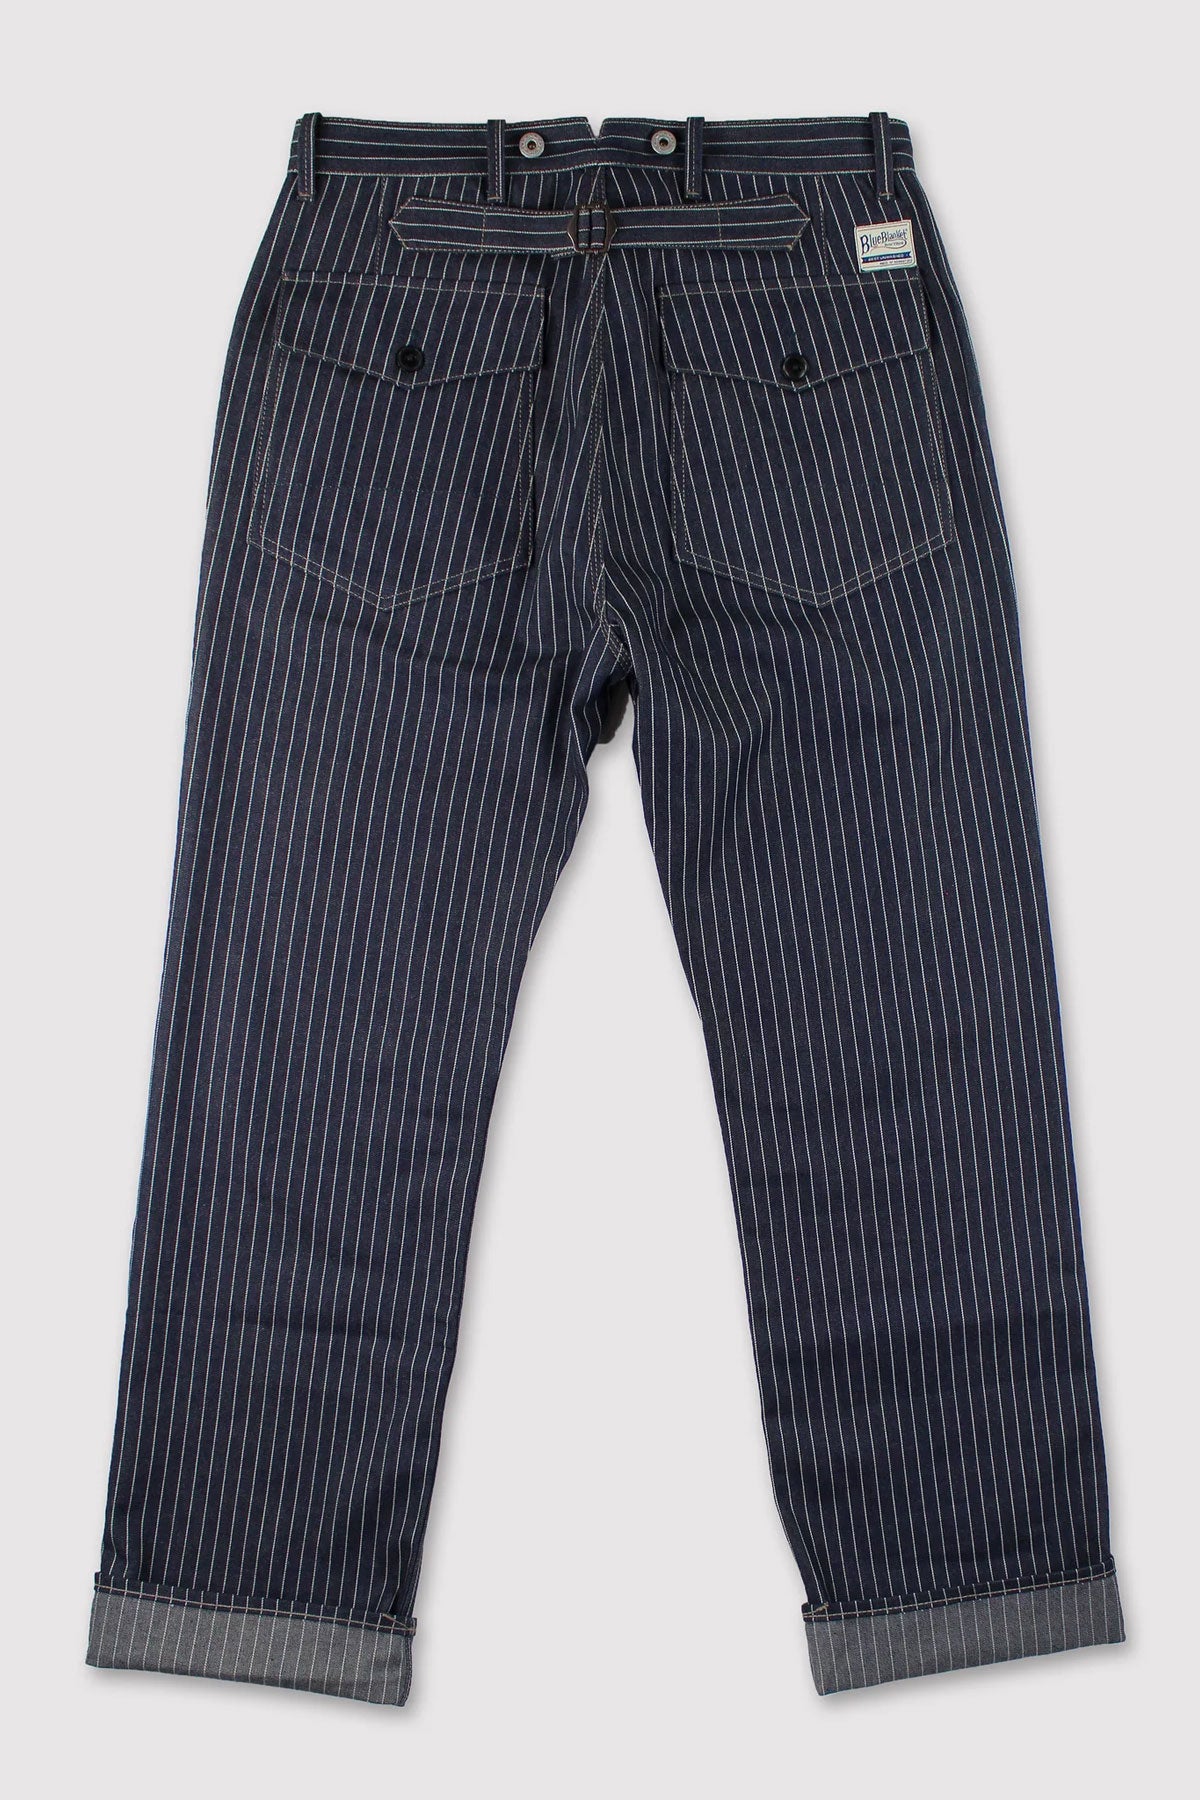 Blue Blanket - IJ1 JP03 Waist Overall Loose Fit, 11 oz. Japanese Dark Indigo Pinstripe Selvedge Denim